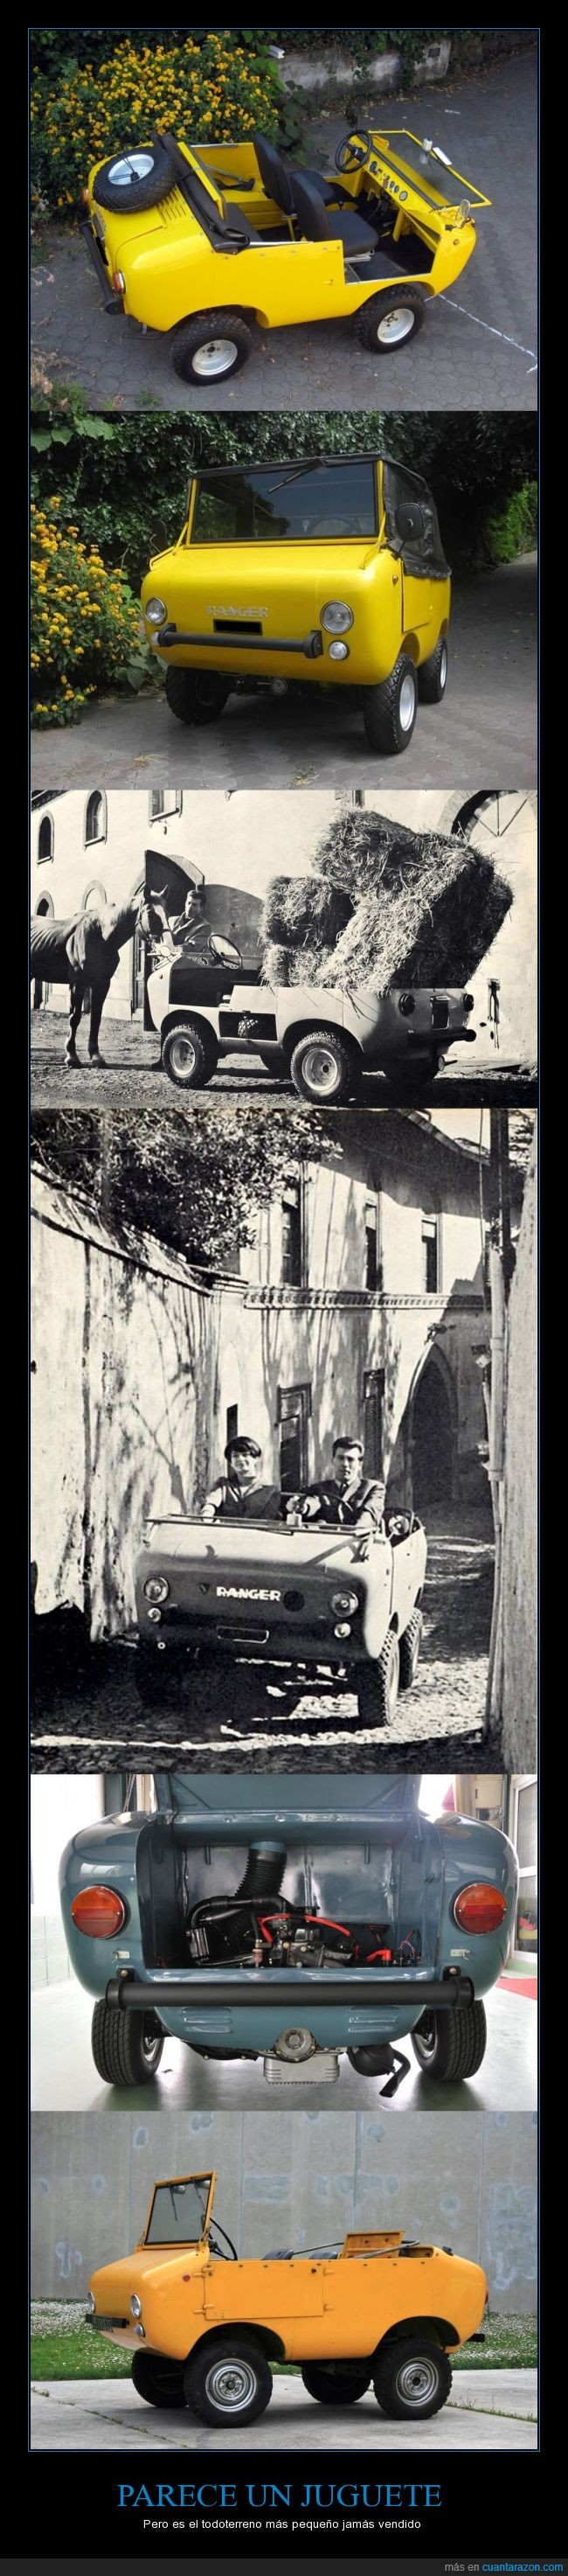 1966,4x4,Ferves Ranger,Juguete,Mini,Motor,Pequeño,Todoterreno